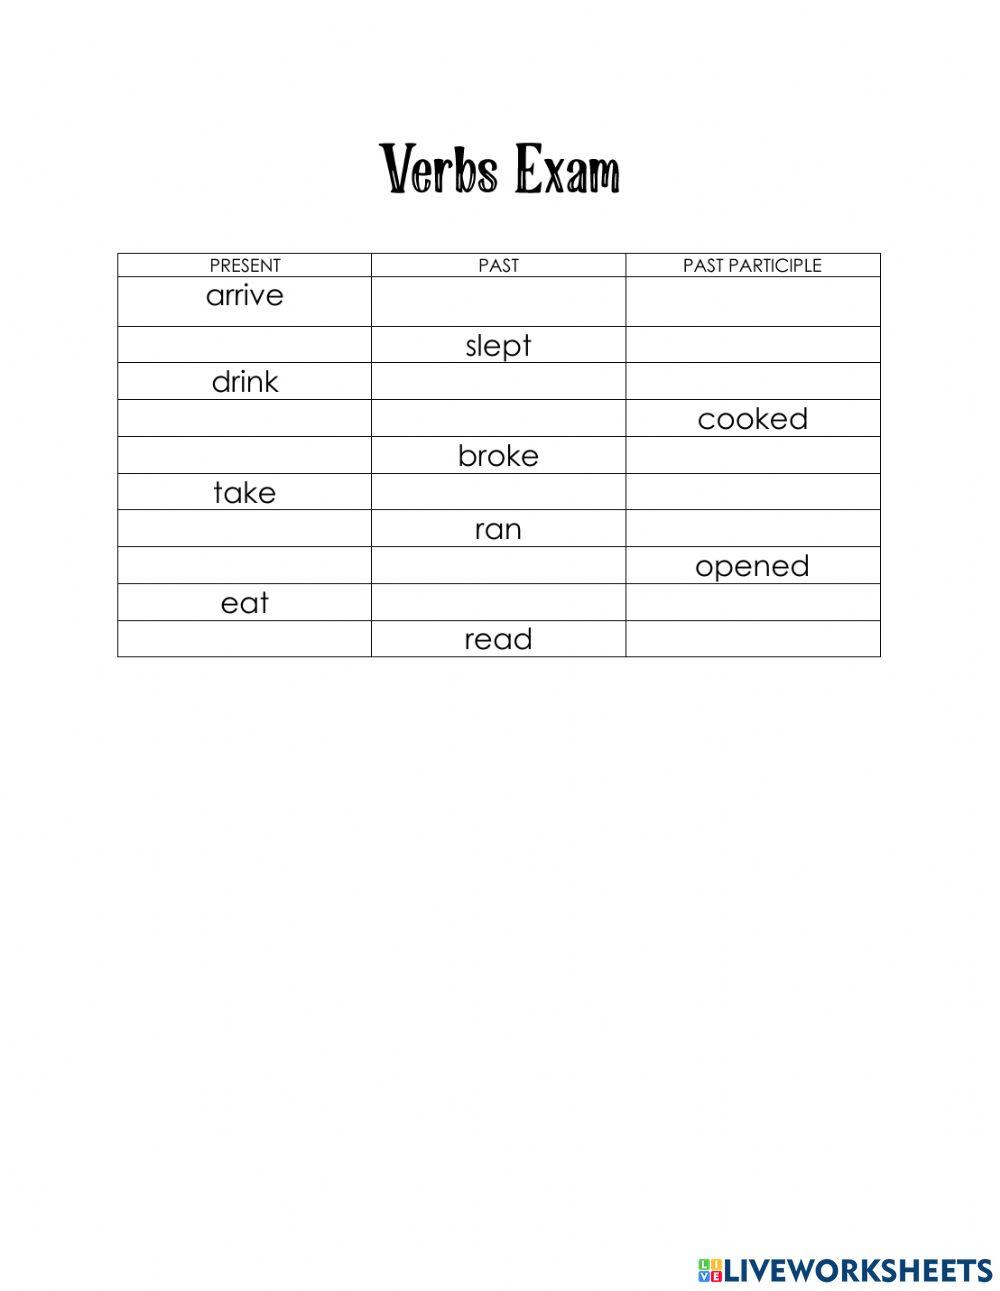 Verbs exam 1